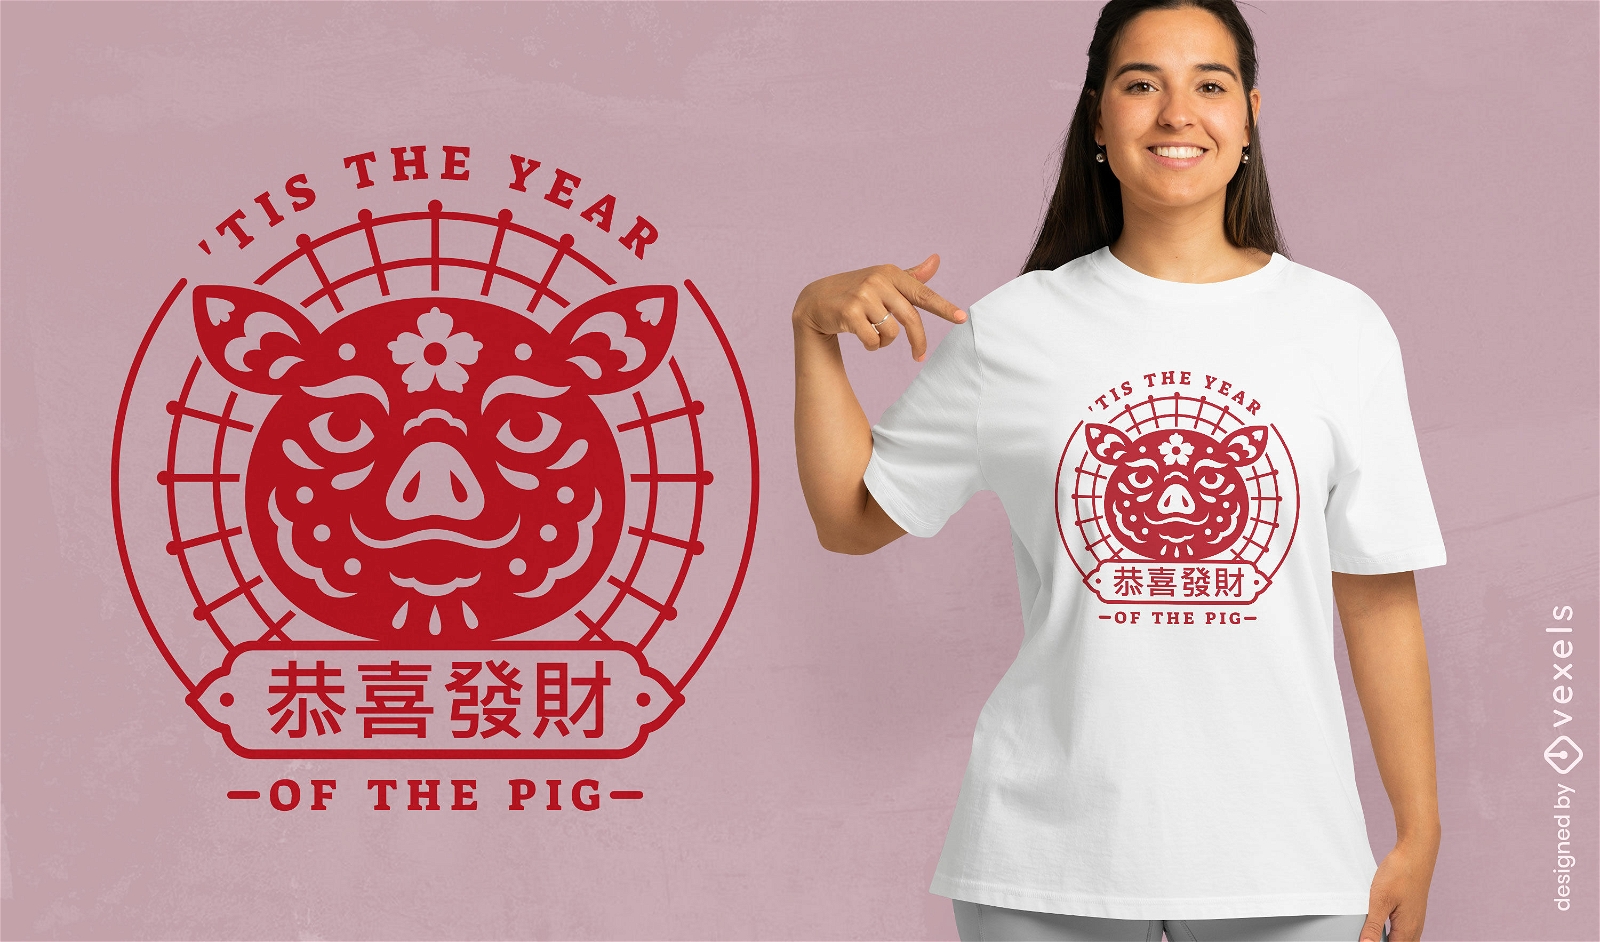 Year of the pig celebration t-shirt design